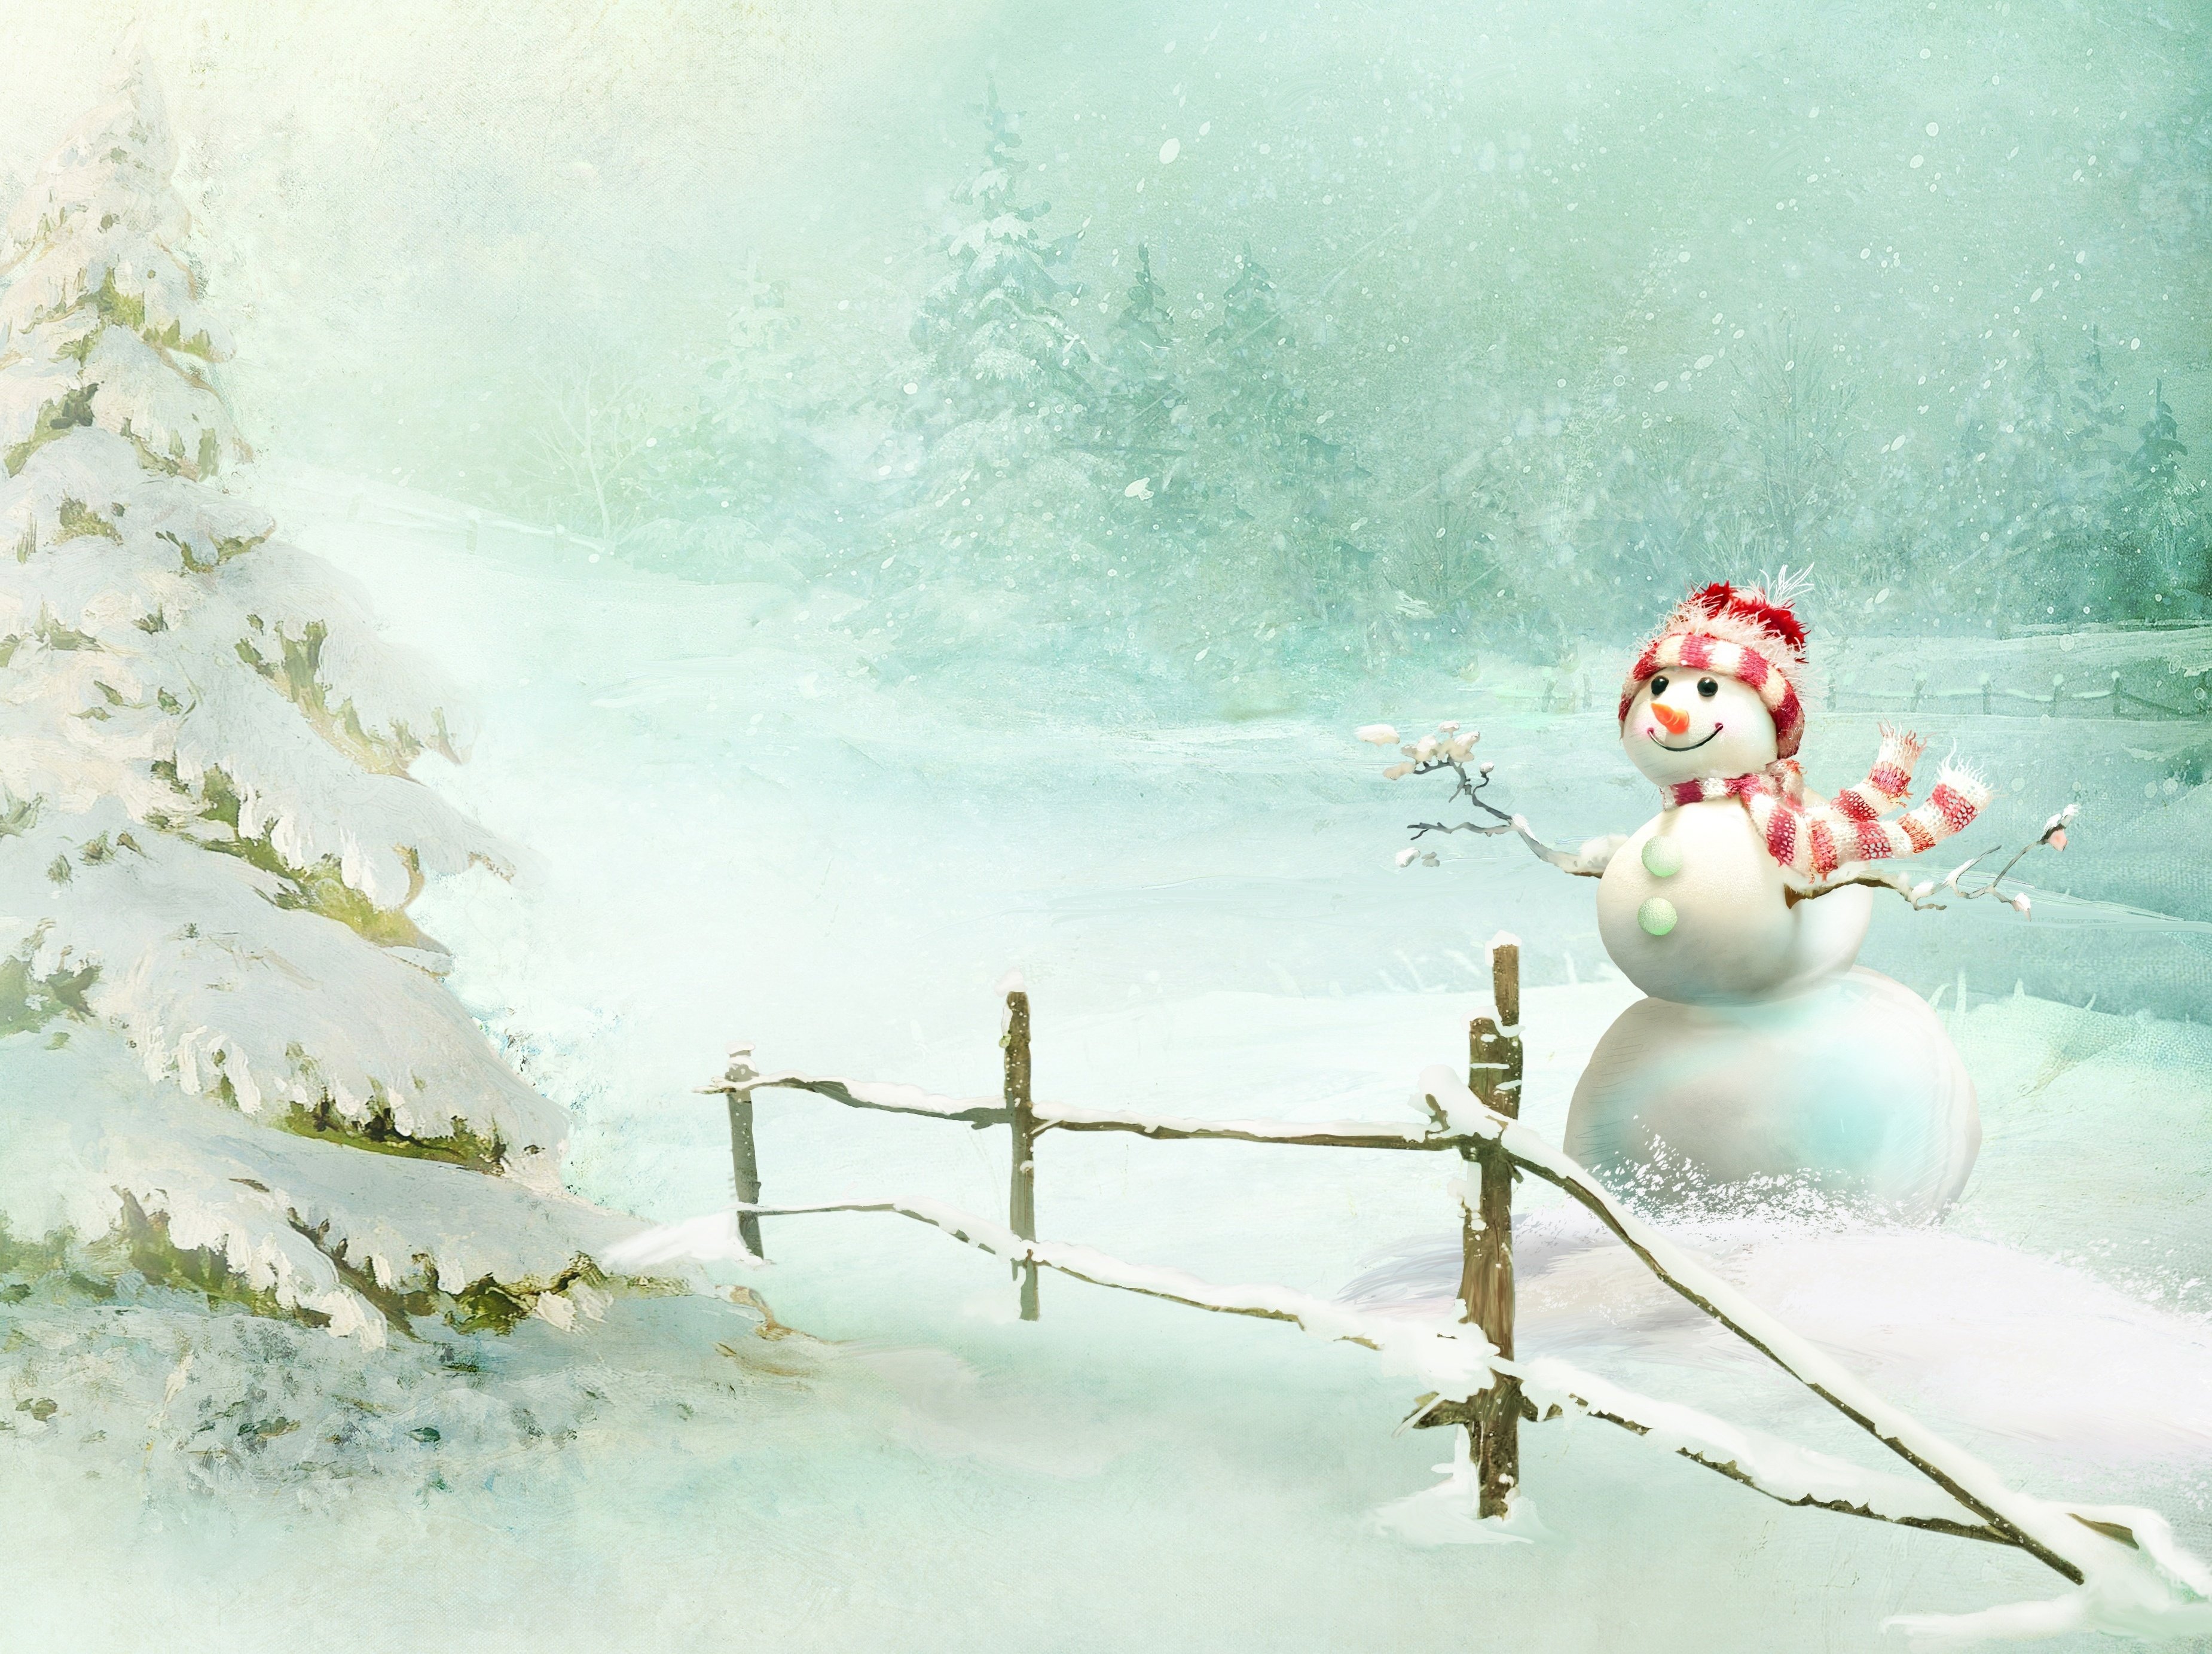 Cute winter scene wallpaper   ForWallpapercom 3700x2766